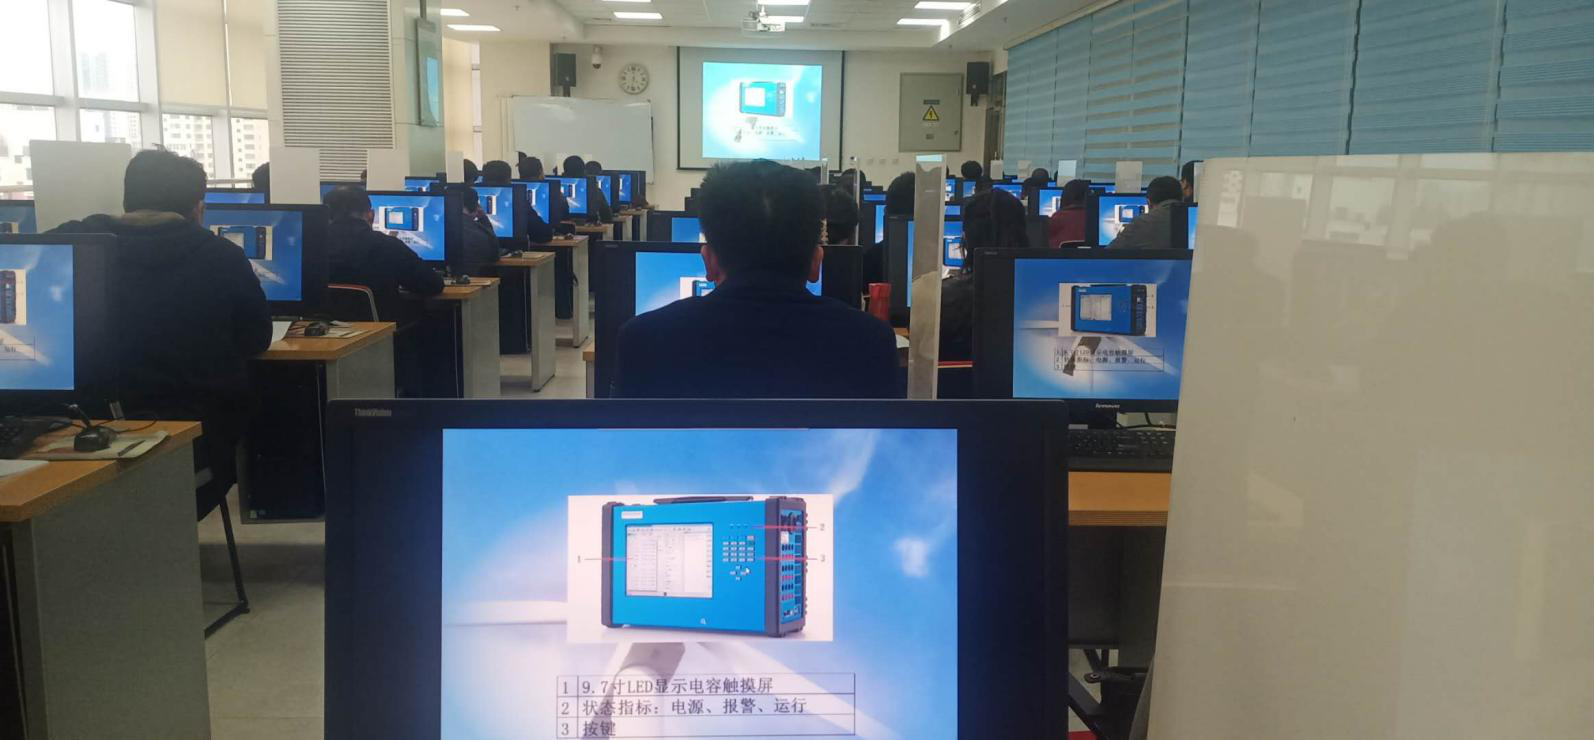 KF86 Training Was Successfully Held in Gansu Province